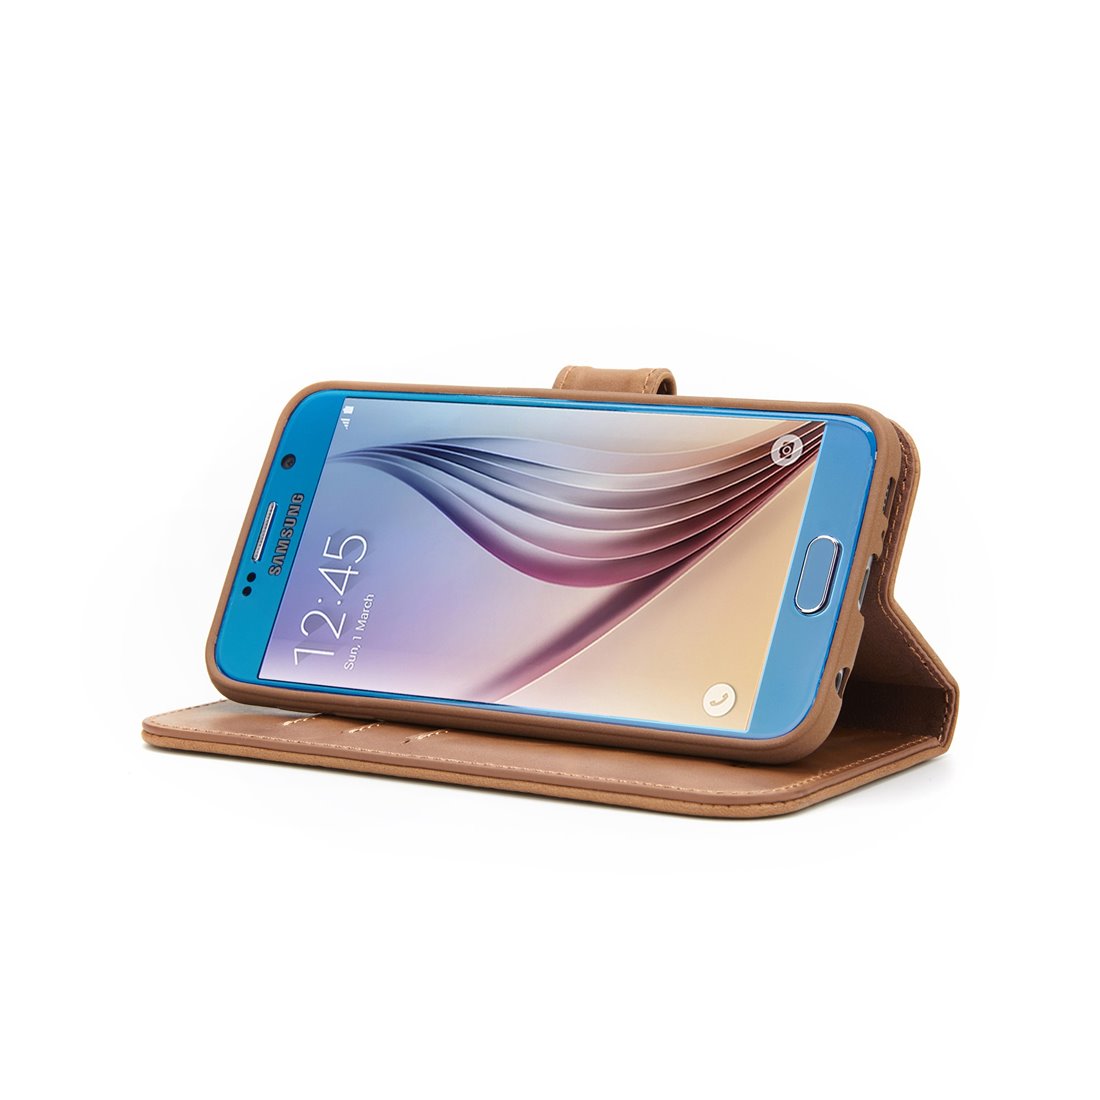 Genuine Leather Bookcase Samsung Galaxy S6 Light Brown